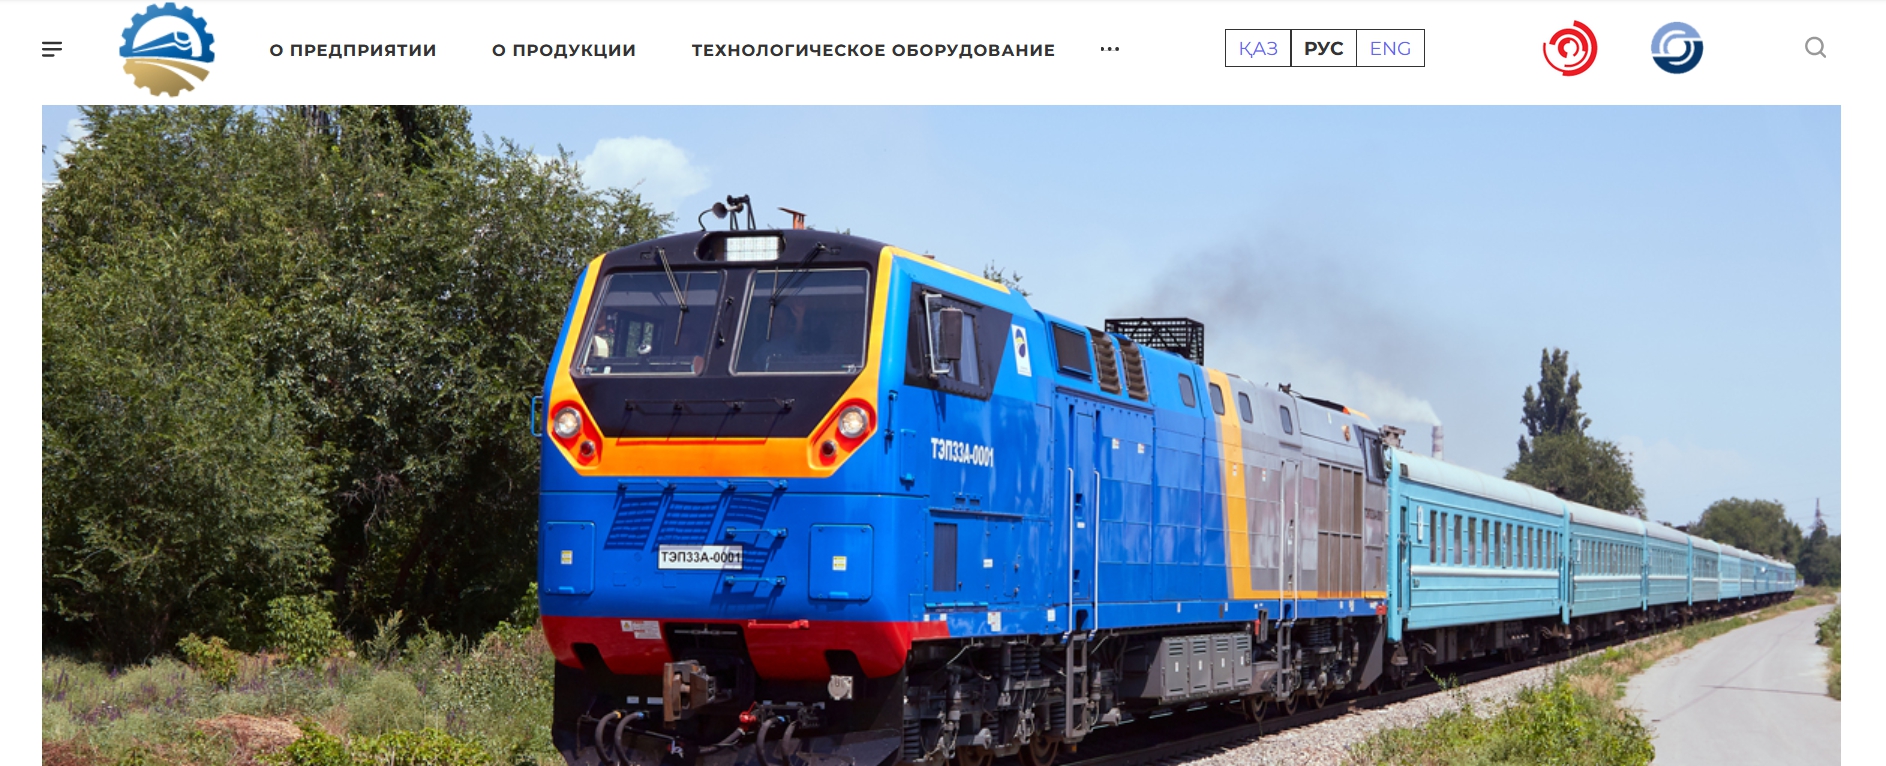 корпоративный сайт ао «локомотив құрастыру зауыты»